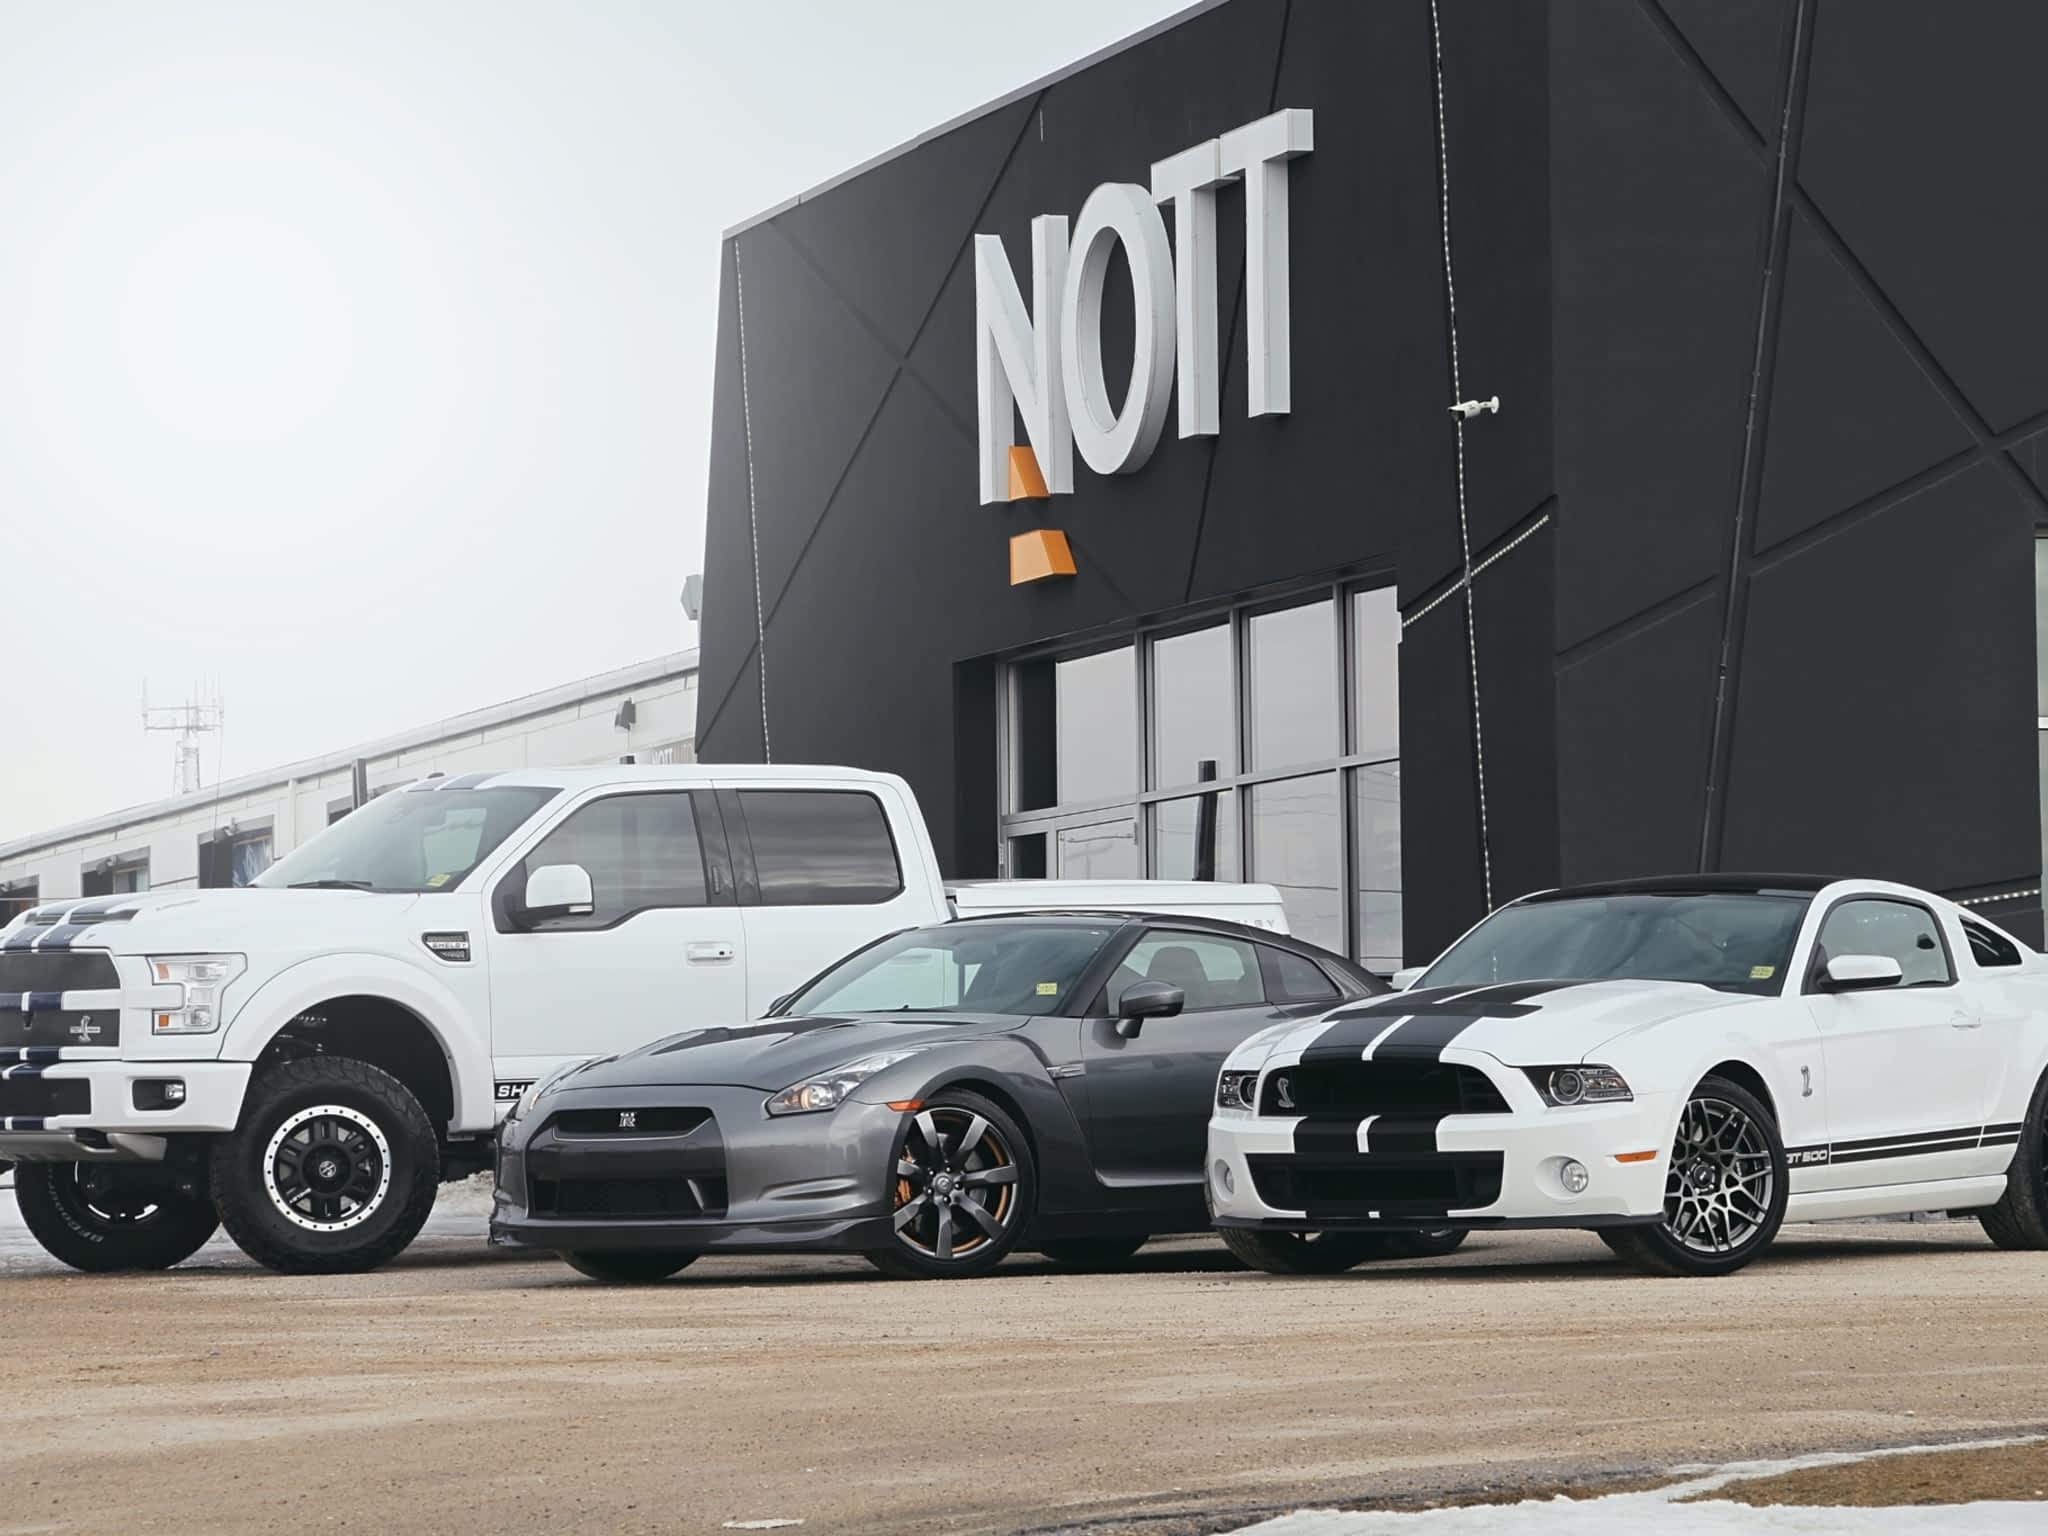 photo Nott Autocorp Ltd